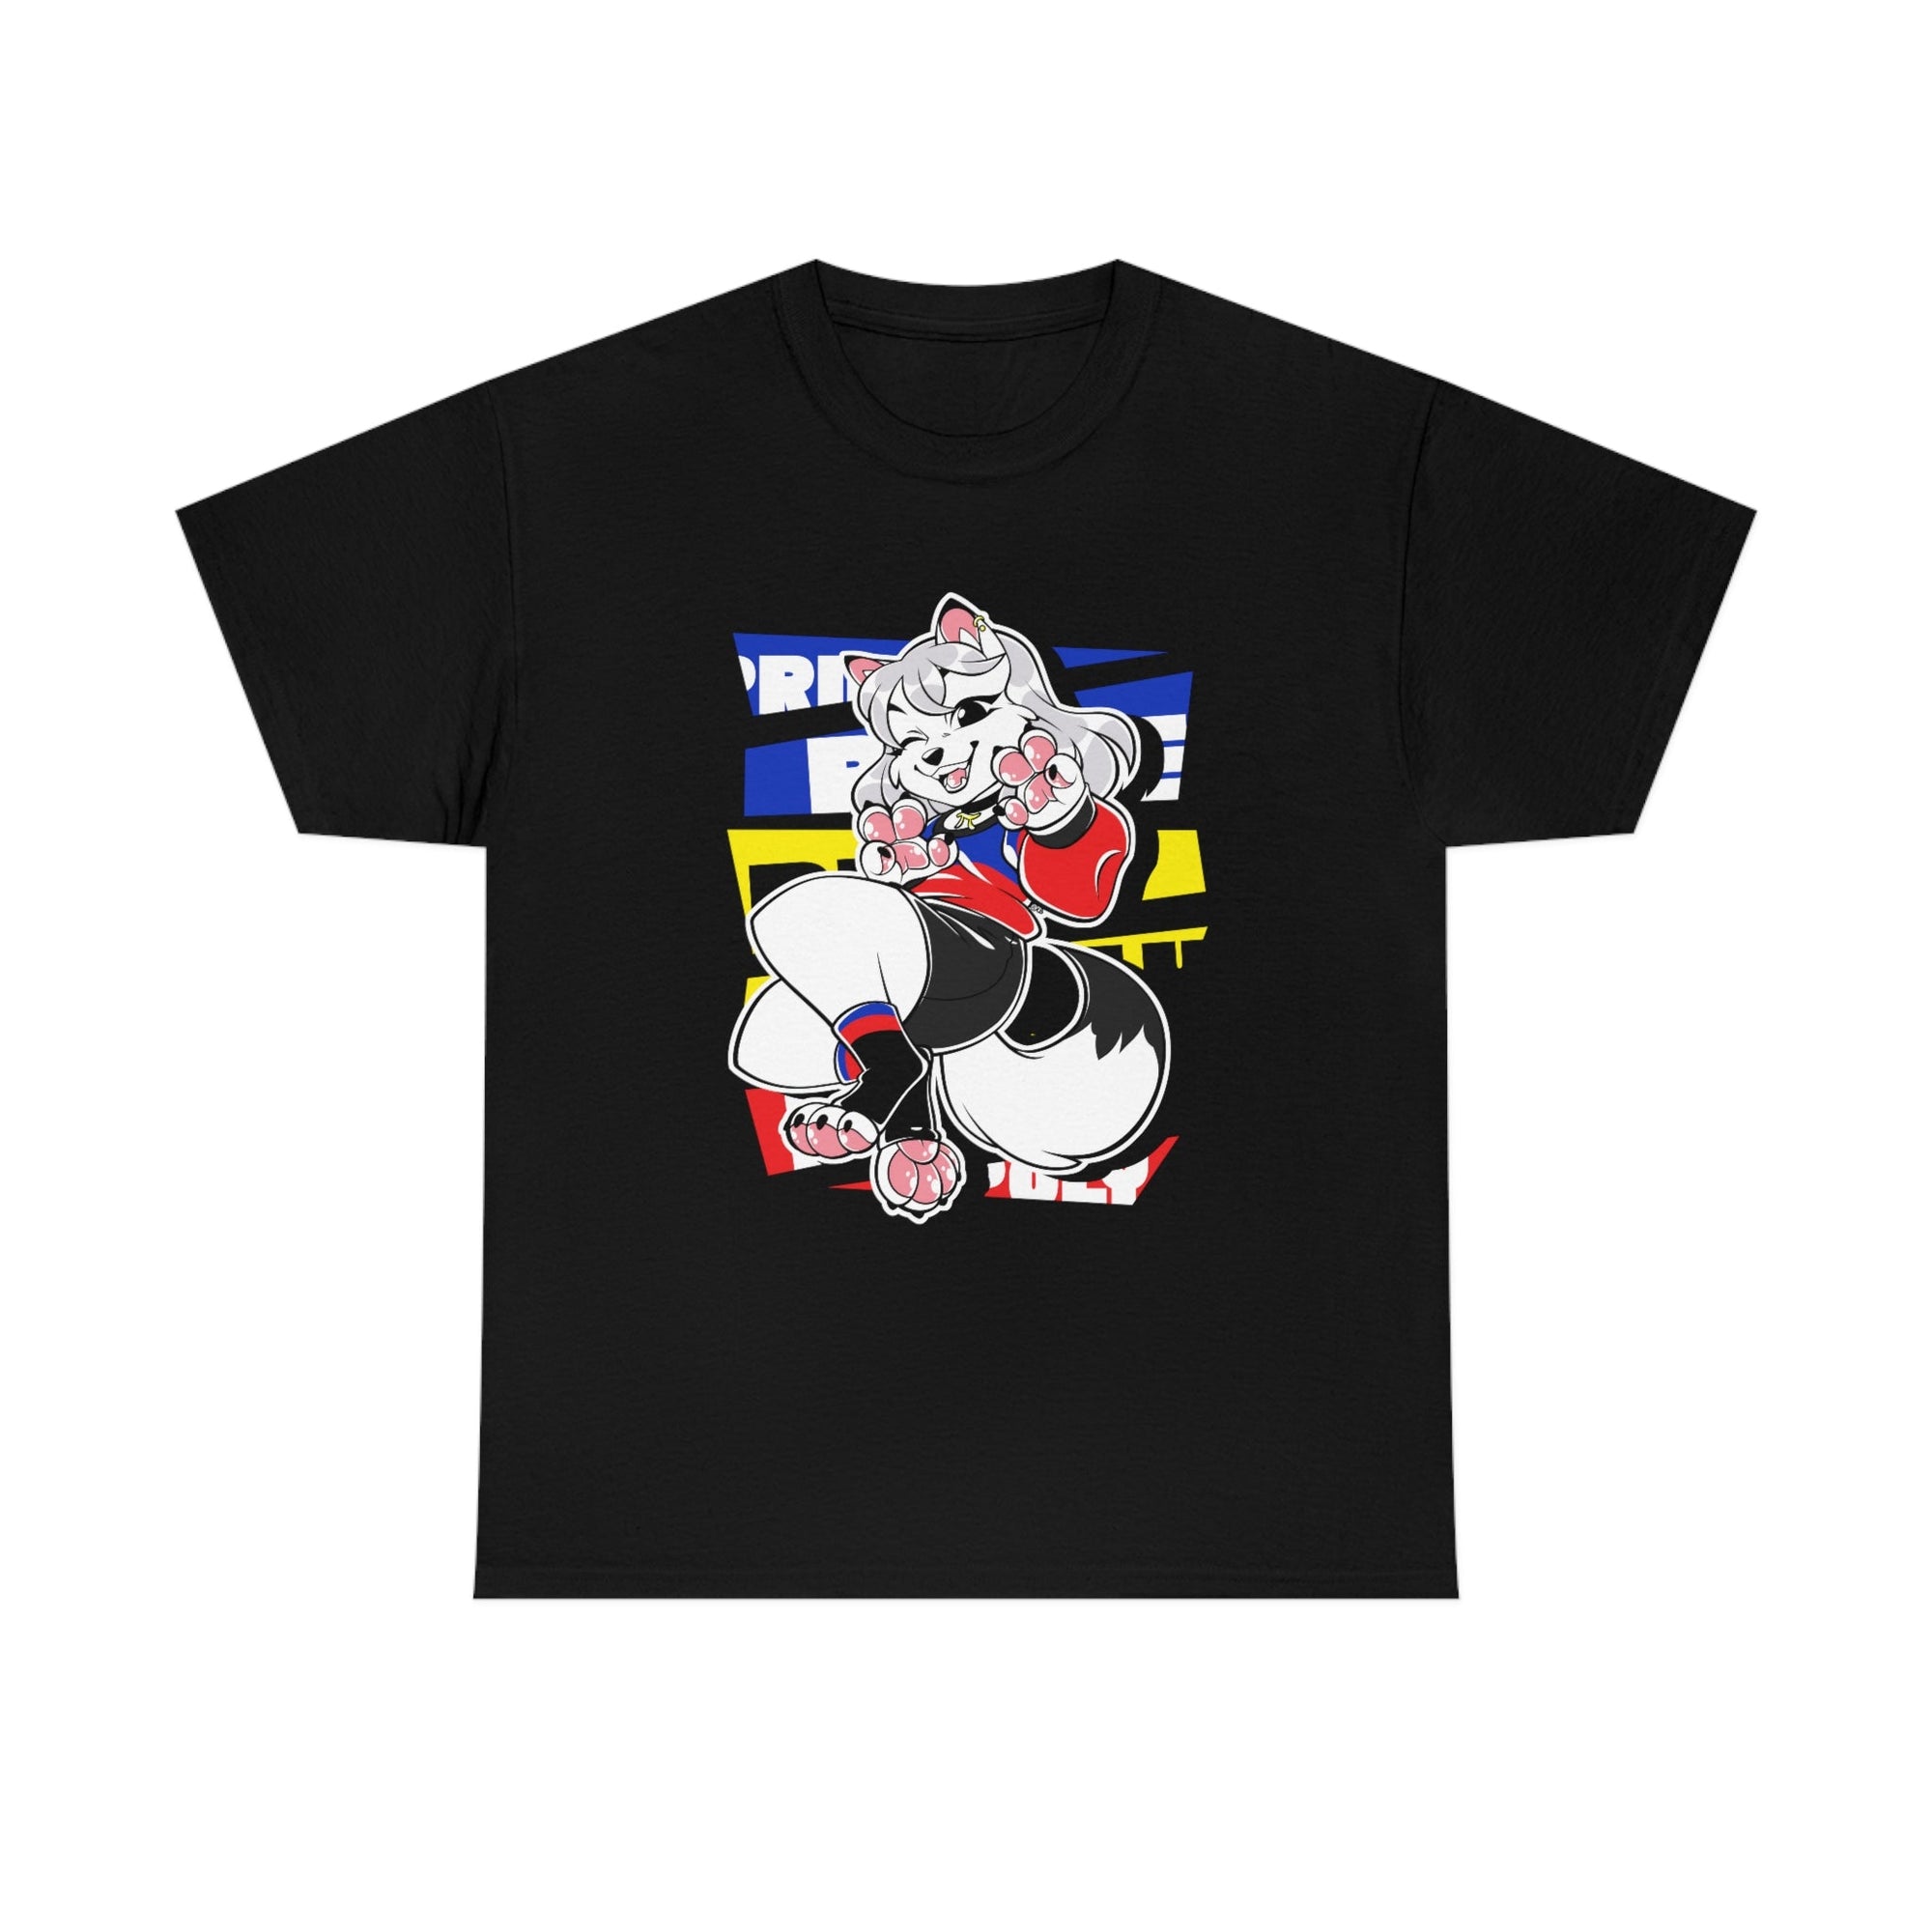 Polyamorous Pride Riley Arctic Fox - T-Shirt T-Shirt Artworktee Black S 